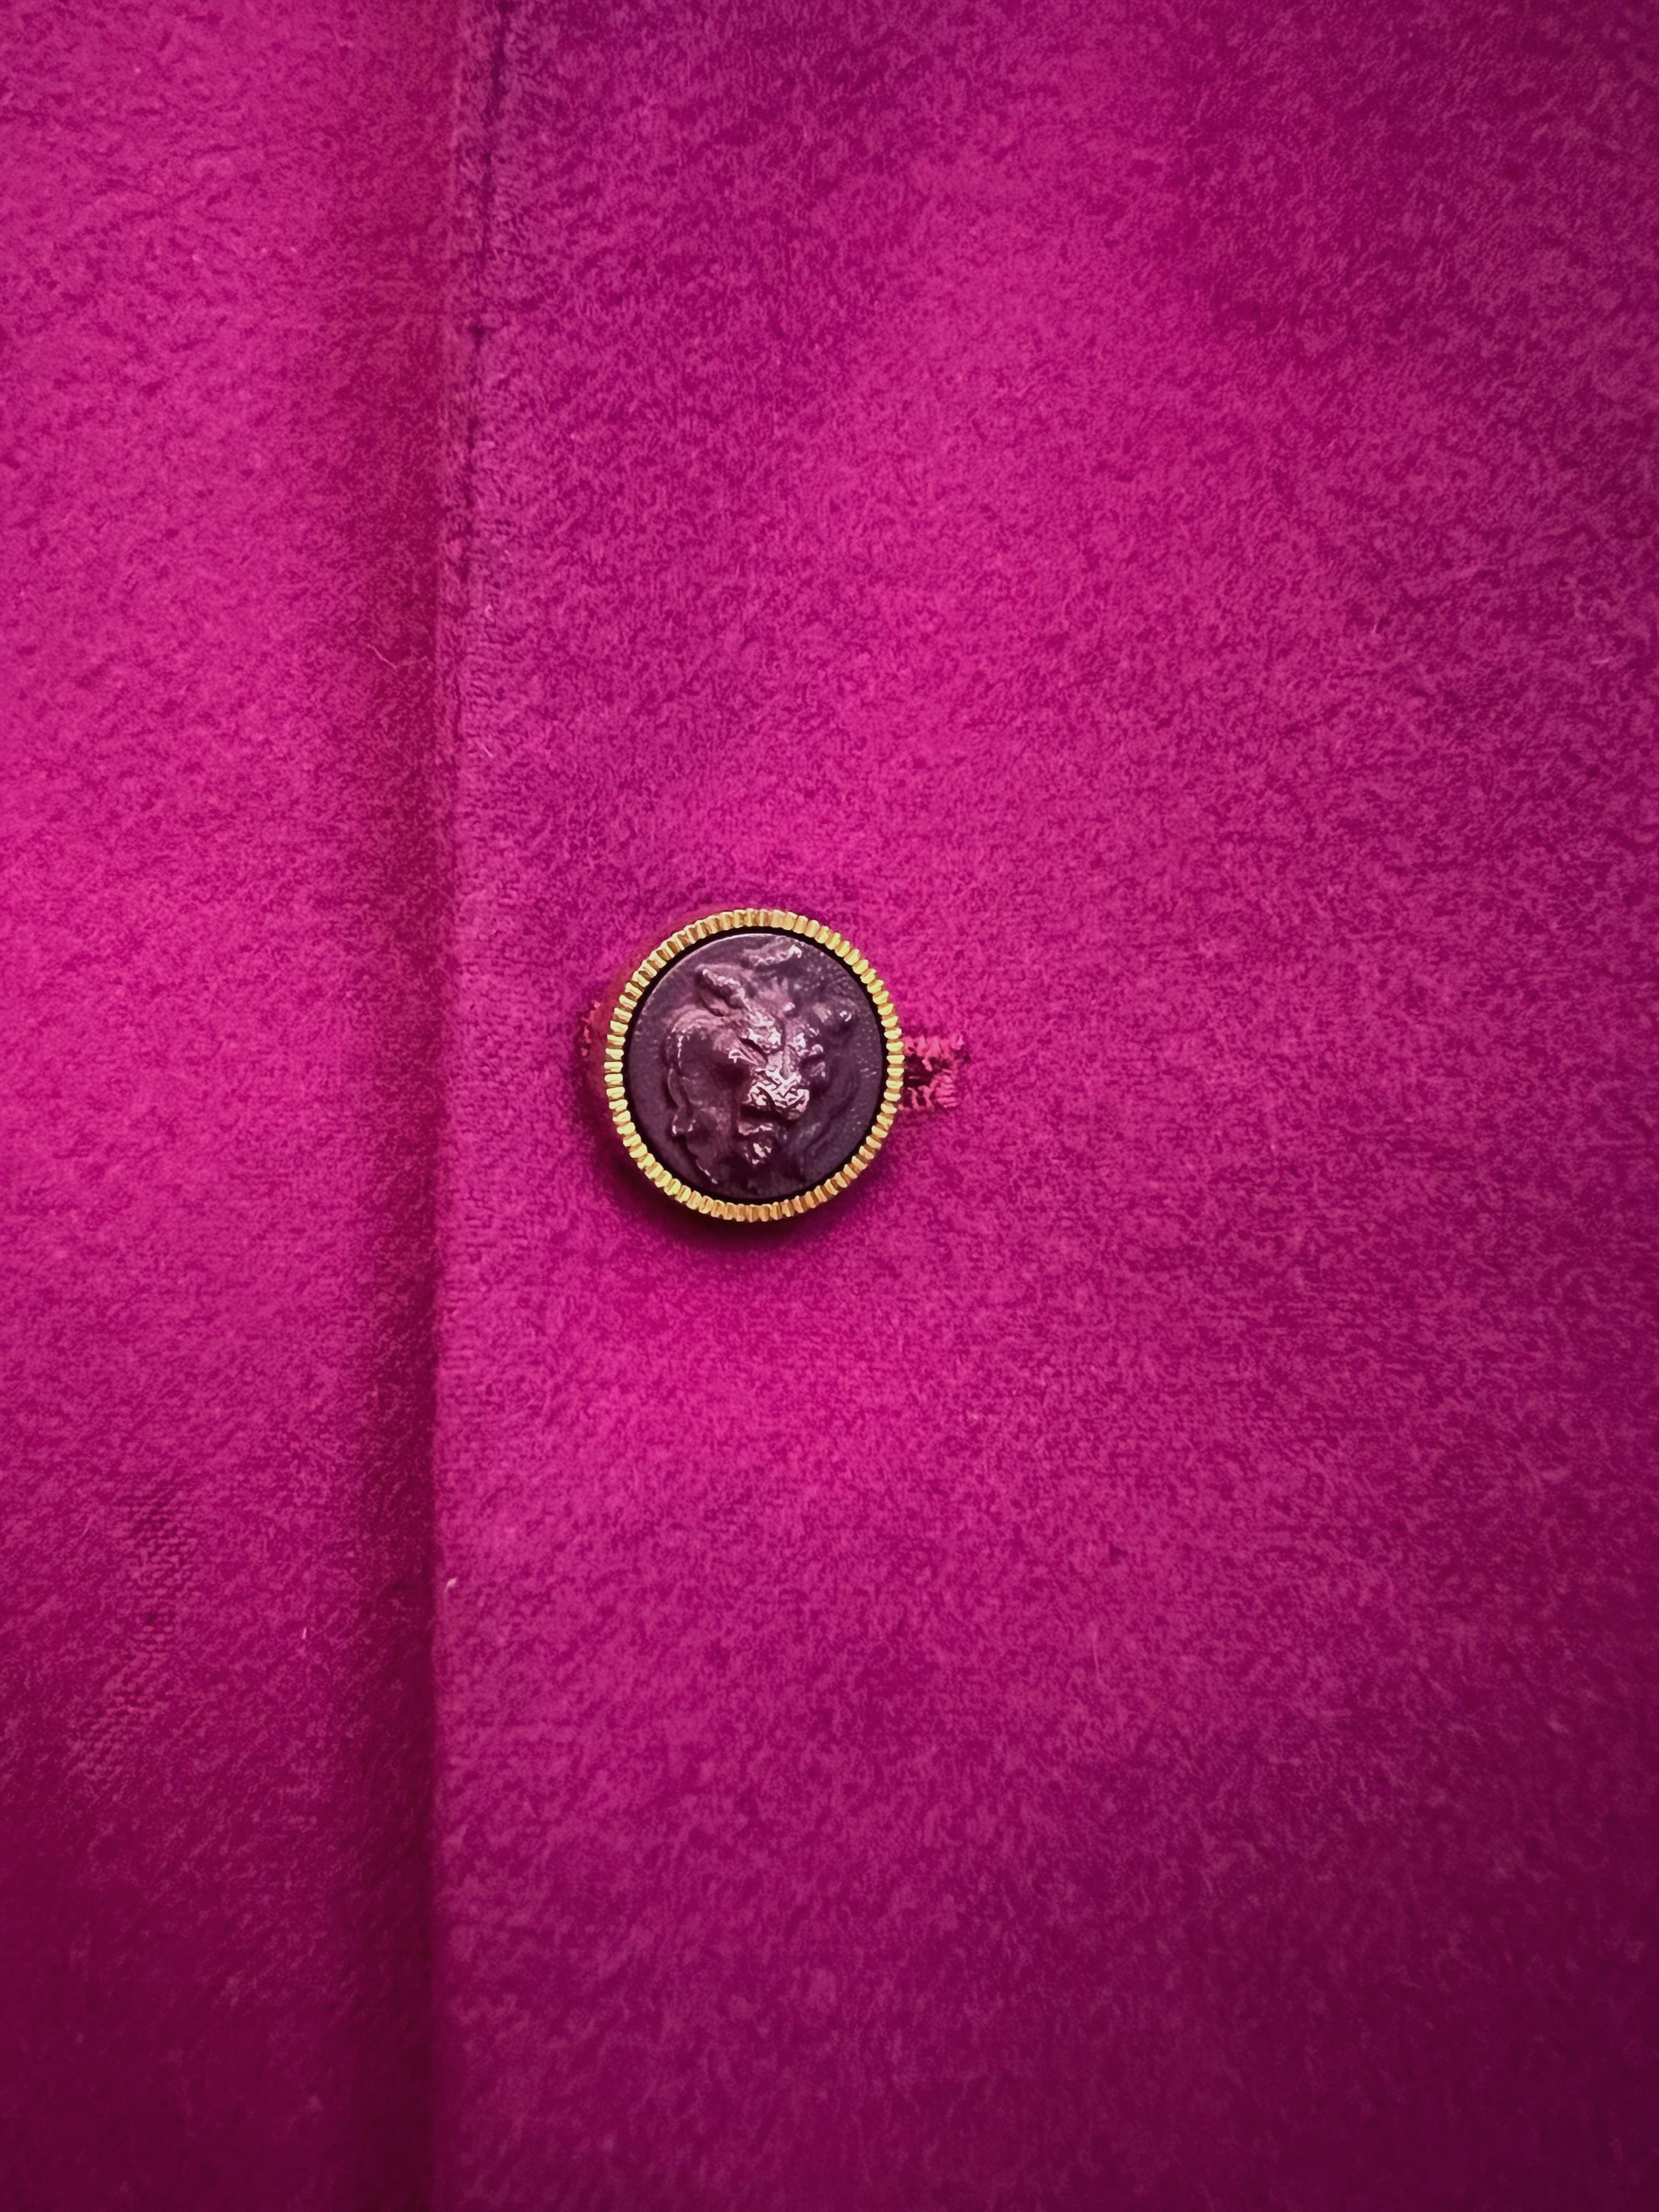 Versus by Gianni Versace - Veste blazer en cachemire doublée de rose magenta arc-en-ciel Unisexe en vente